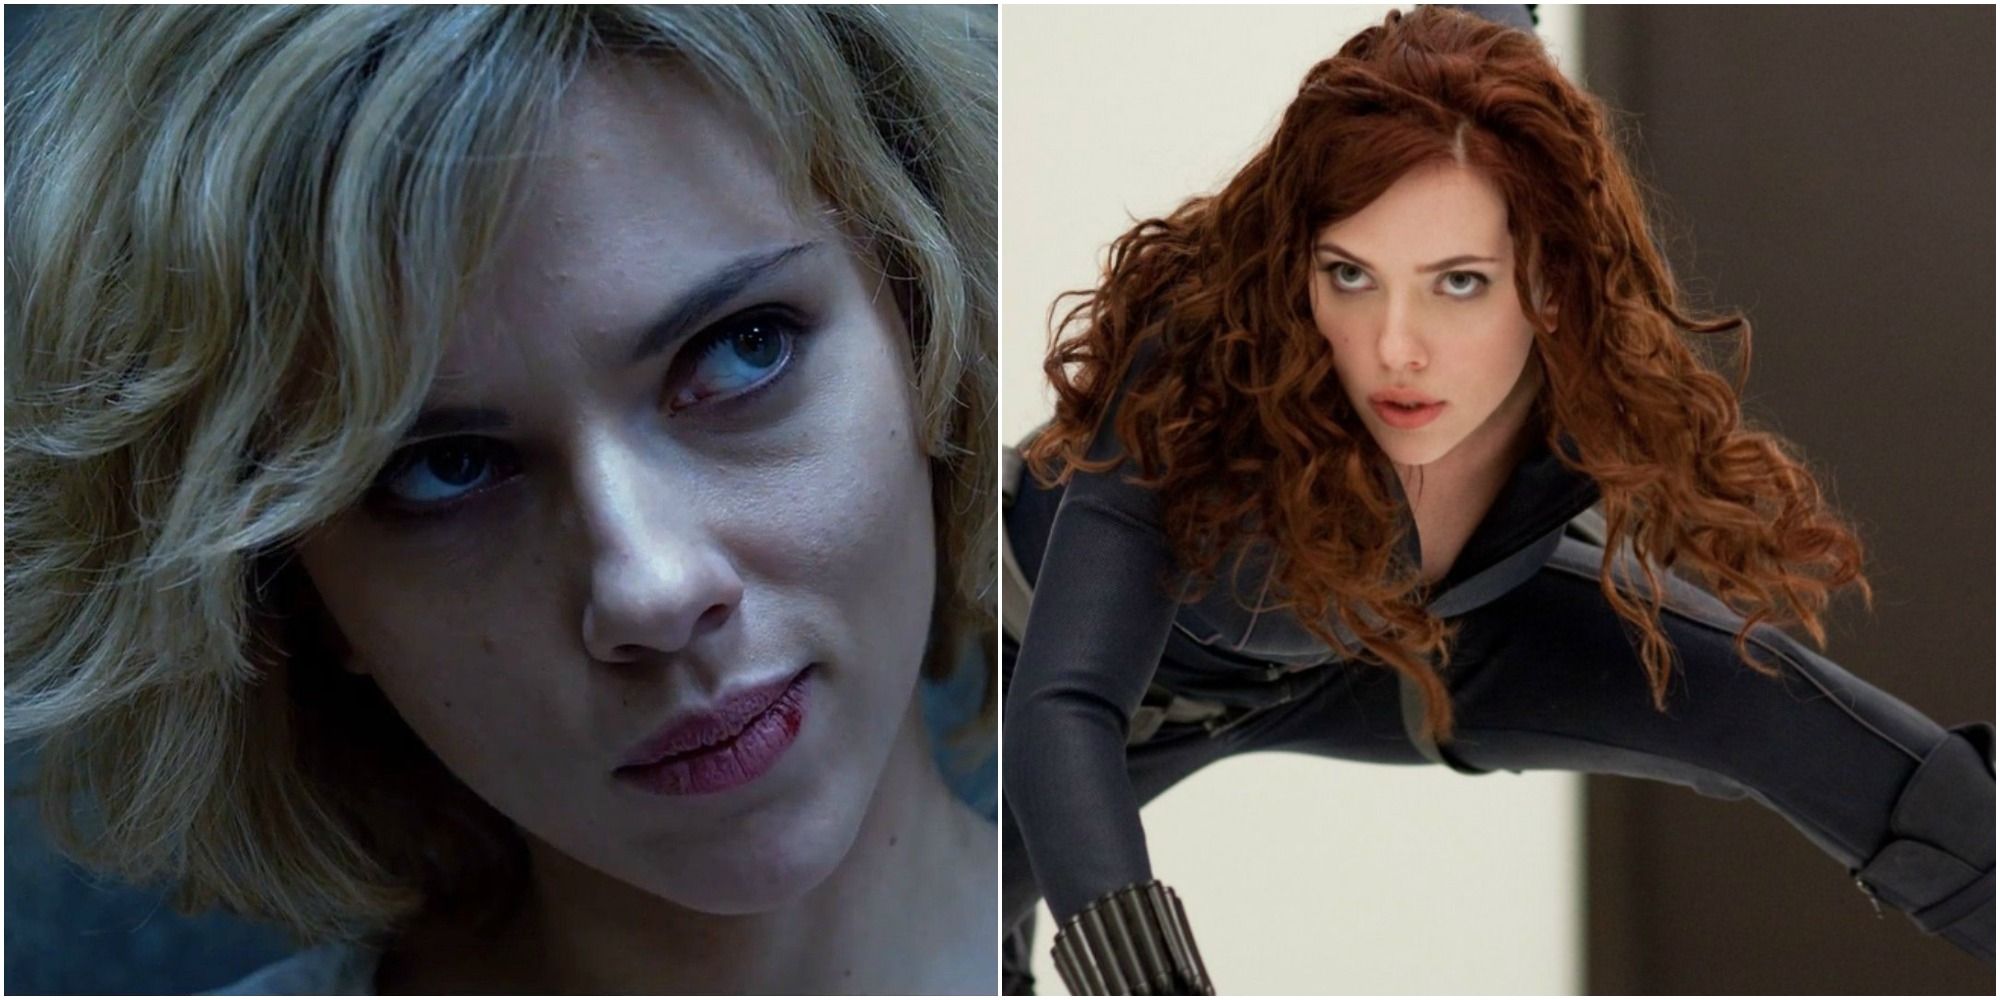 Top 3 Scarlett Johansson Movies - AgentNico Reviews